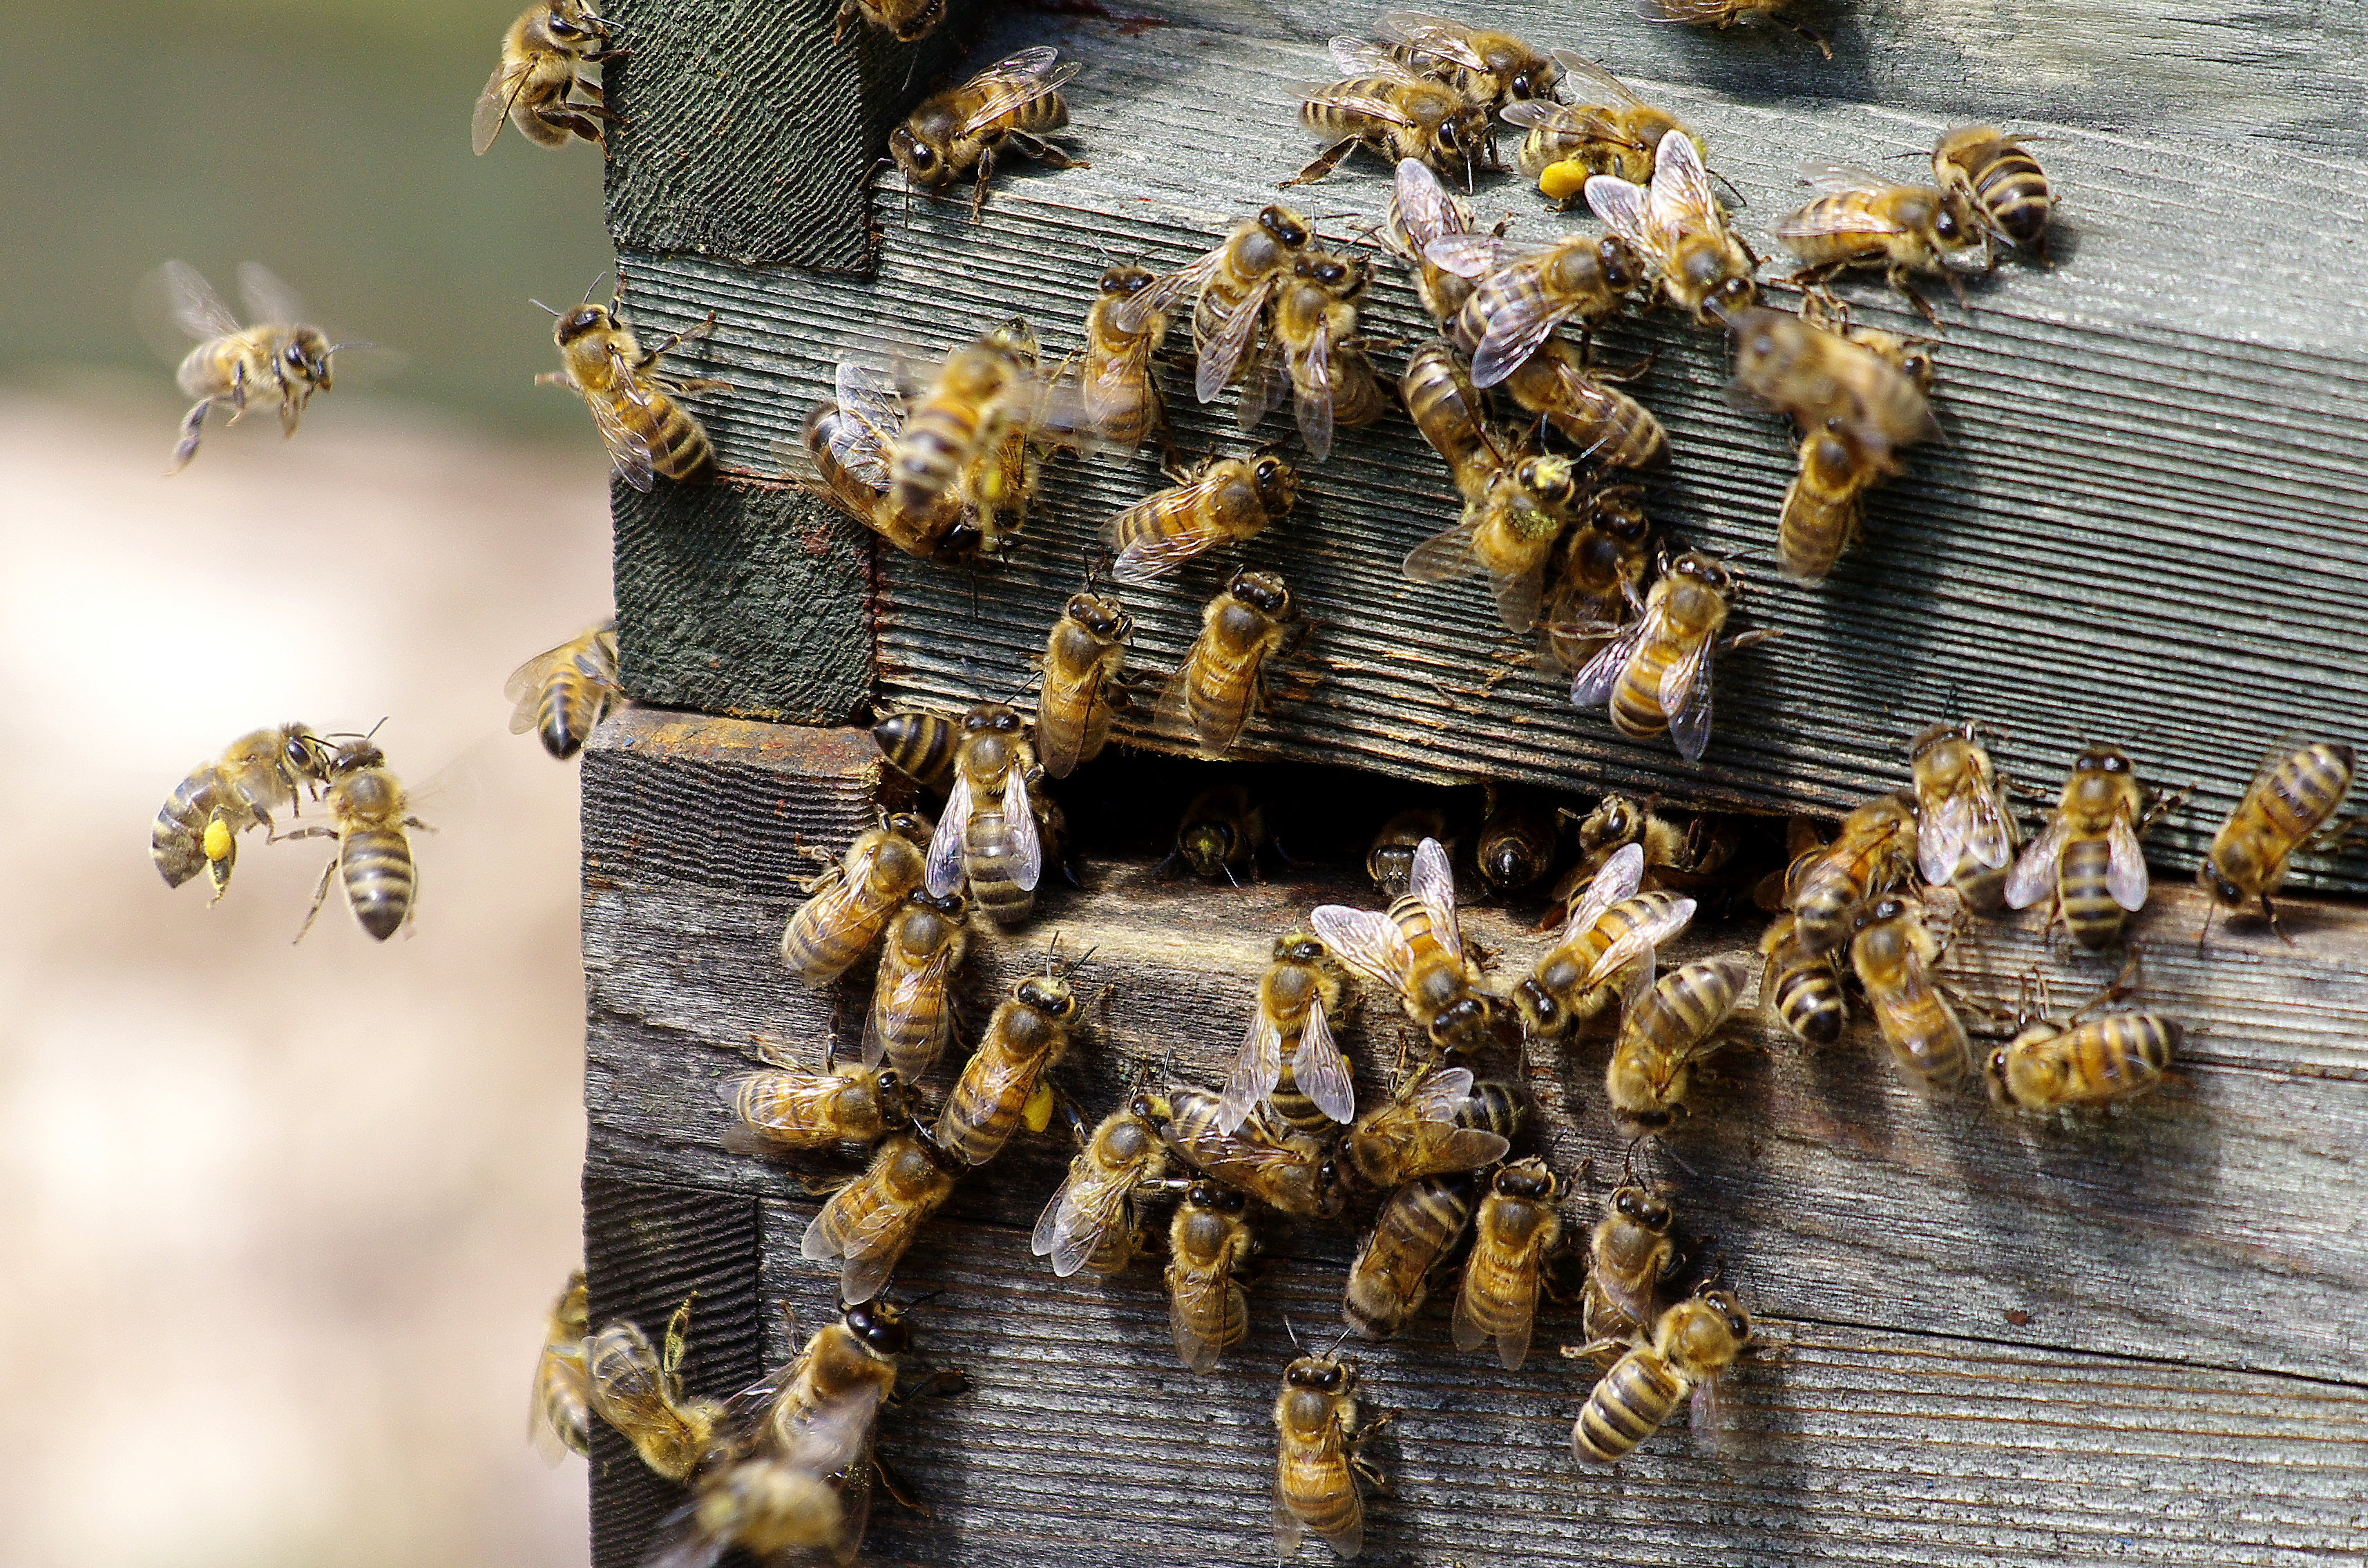 Honey Bees [Apis mellifera] at the entrance to a hive.